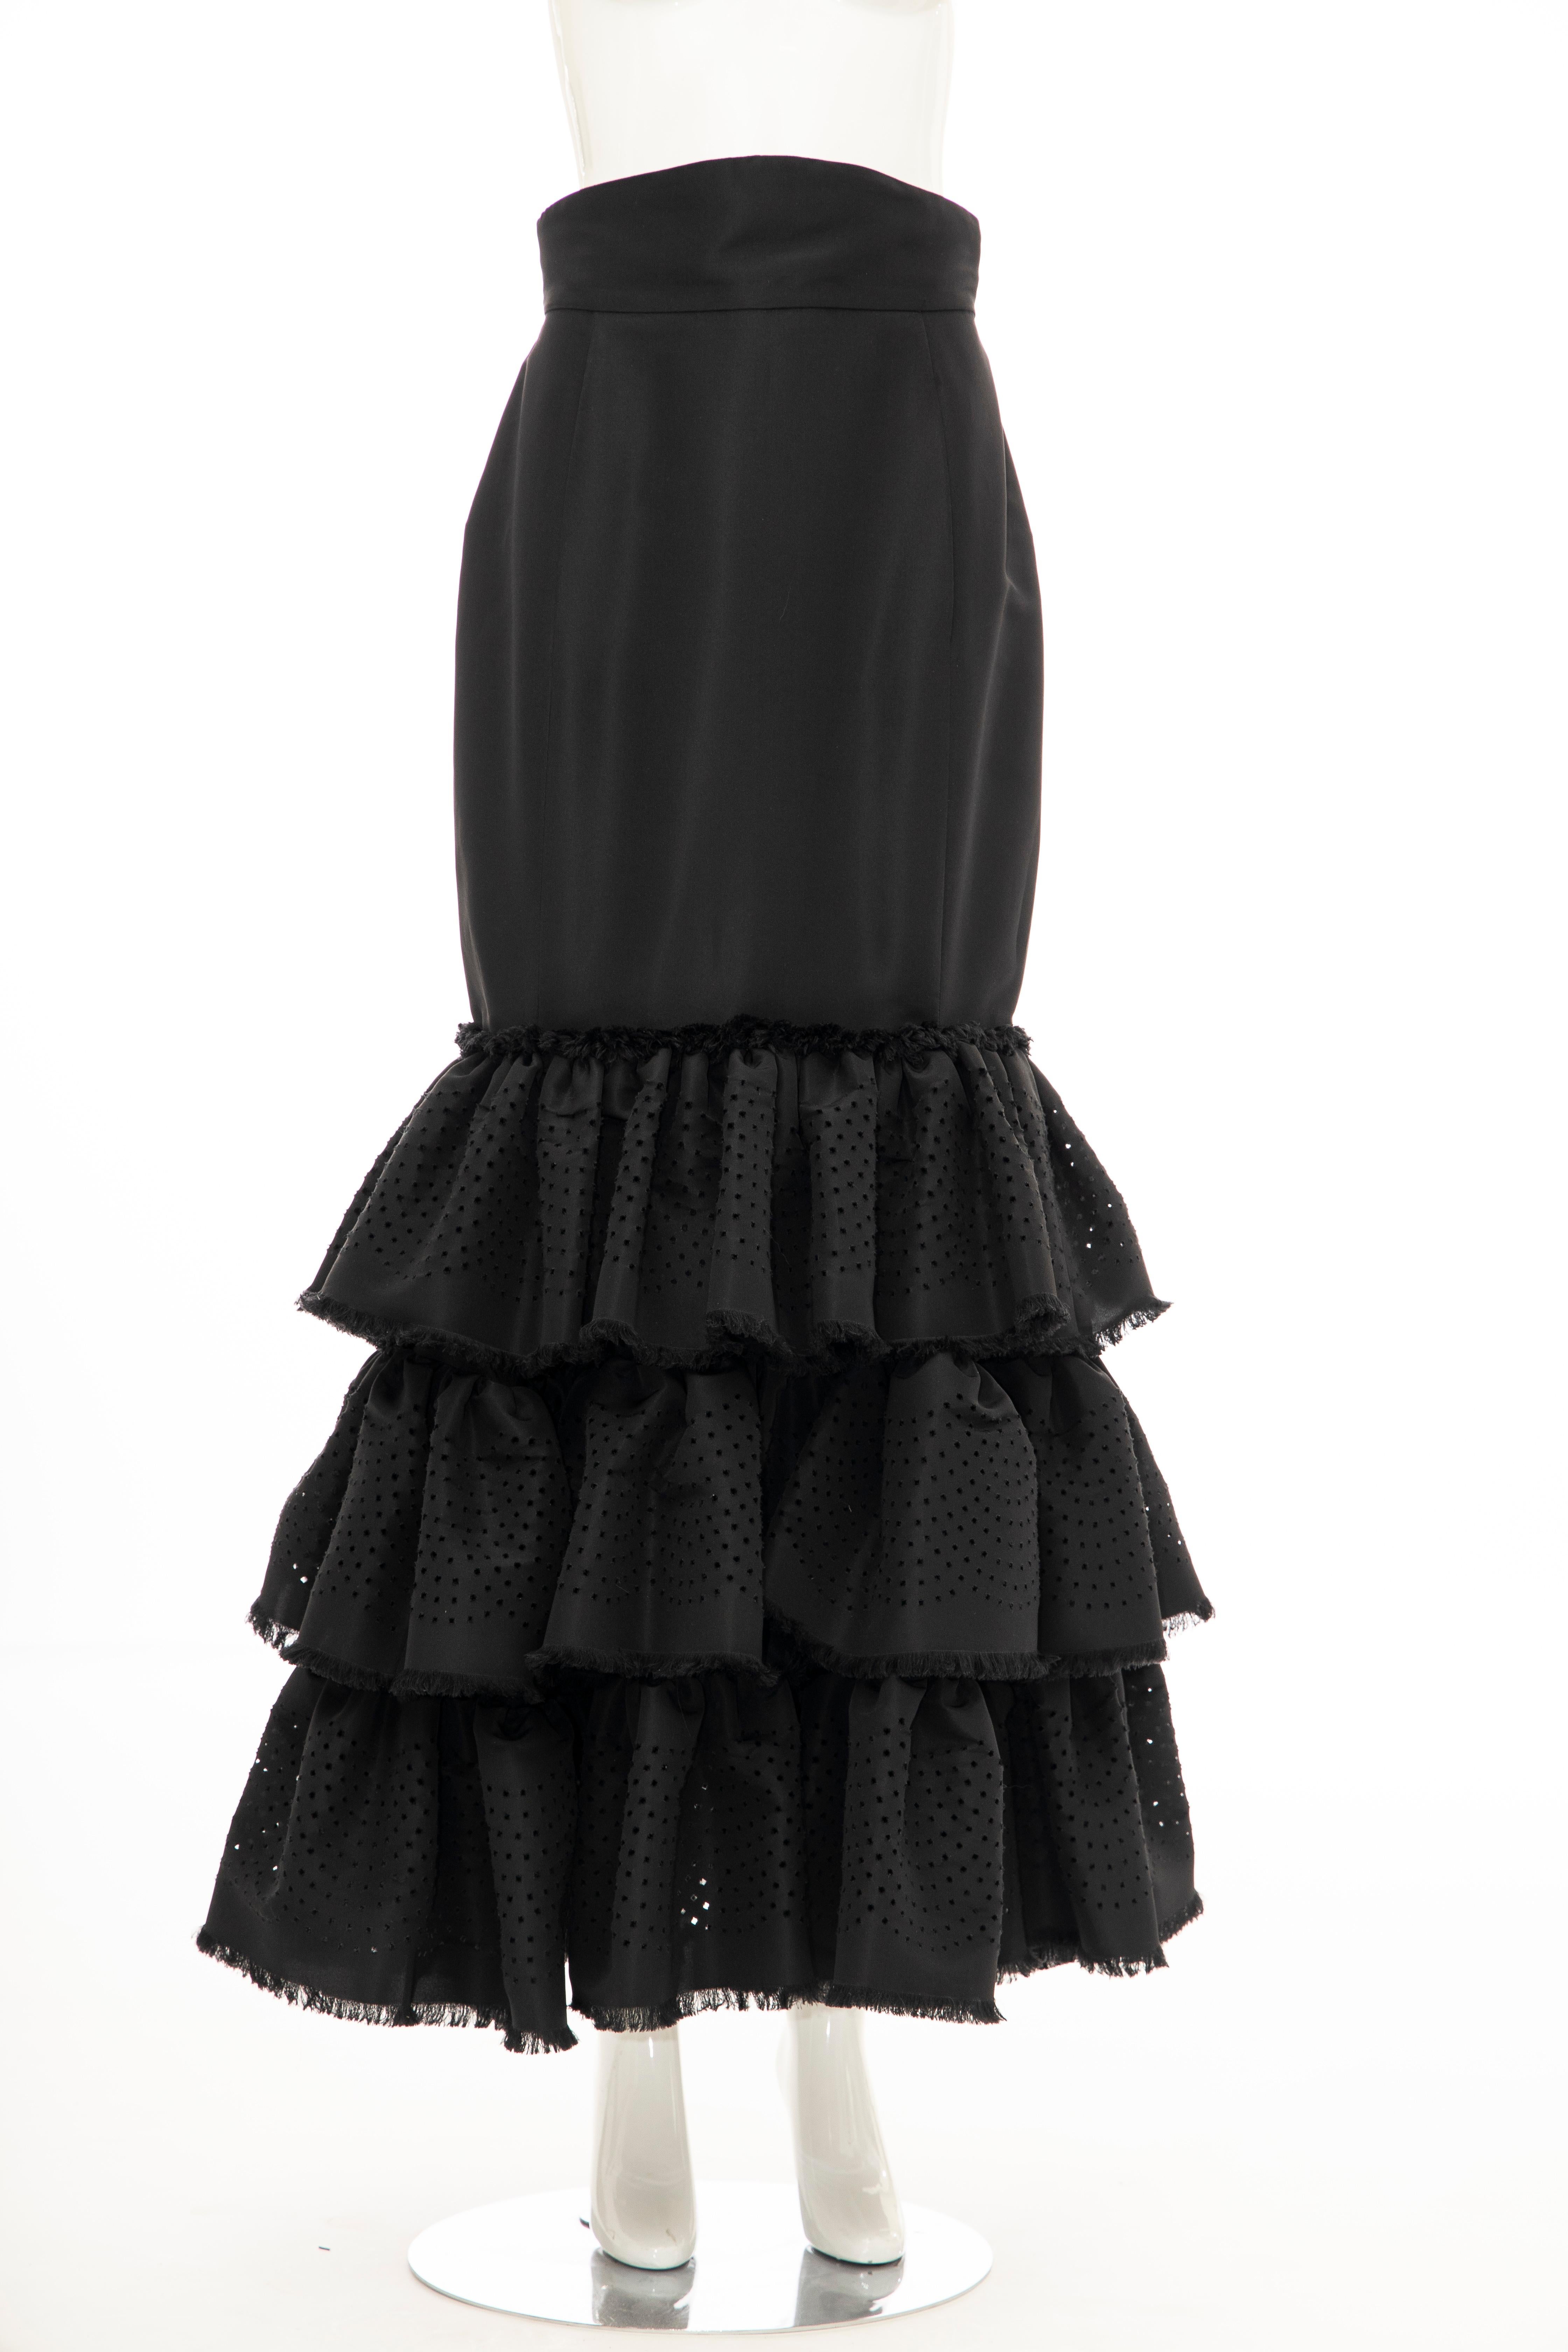 Oscar de la Renta Black Punched Silk Faille Evening Skirt, Fall 2001 For Sale 1